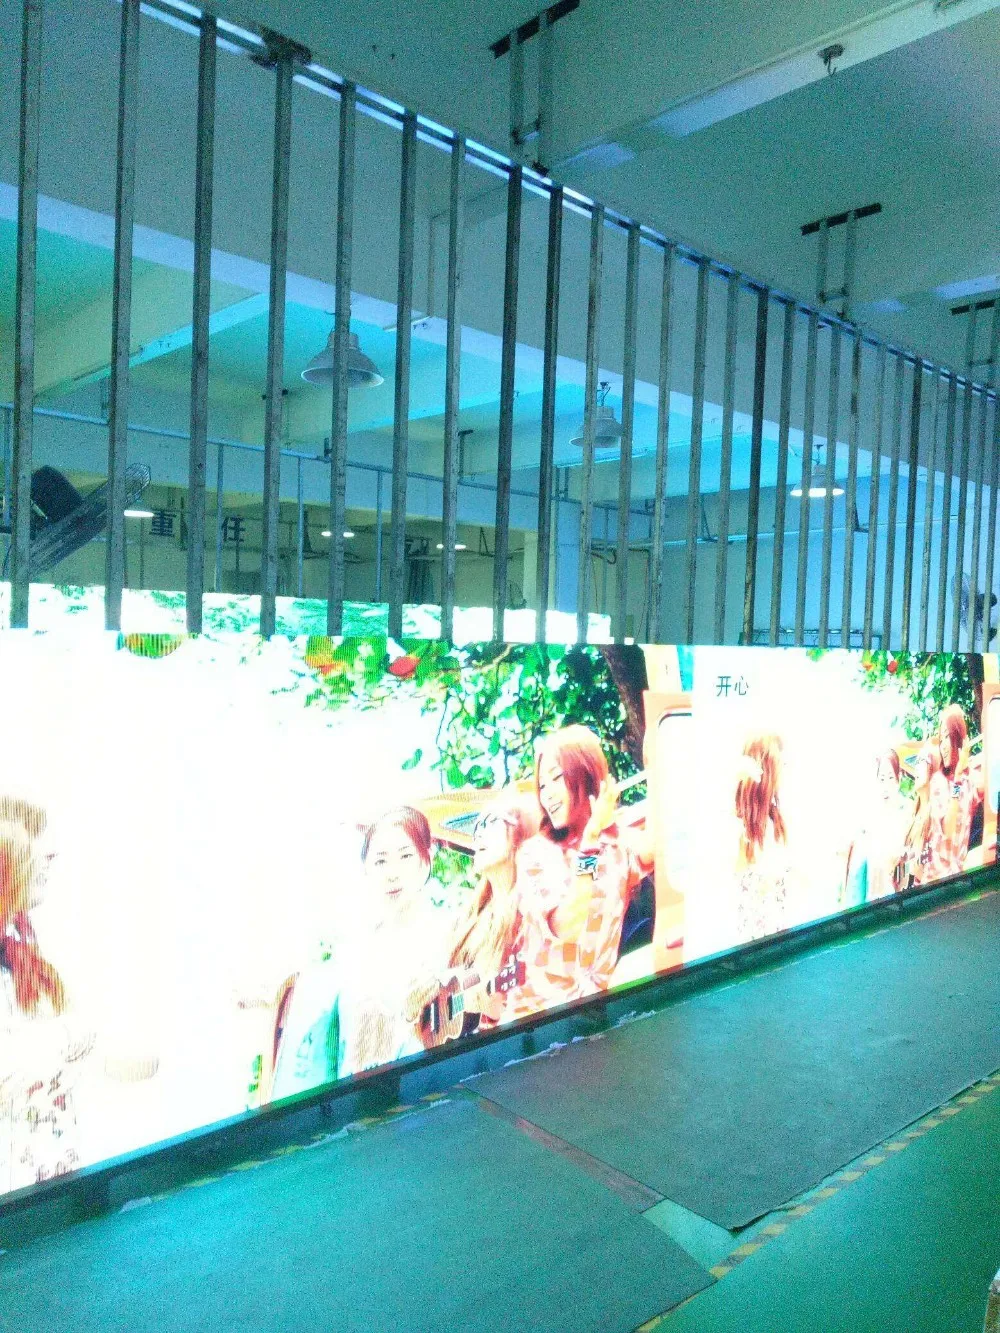 perimeter stadium consumption waterproof low power led giant outdoor 6mm programmable billboard display sports